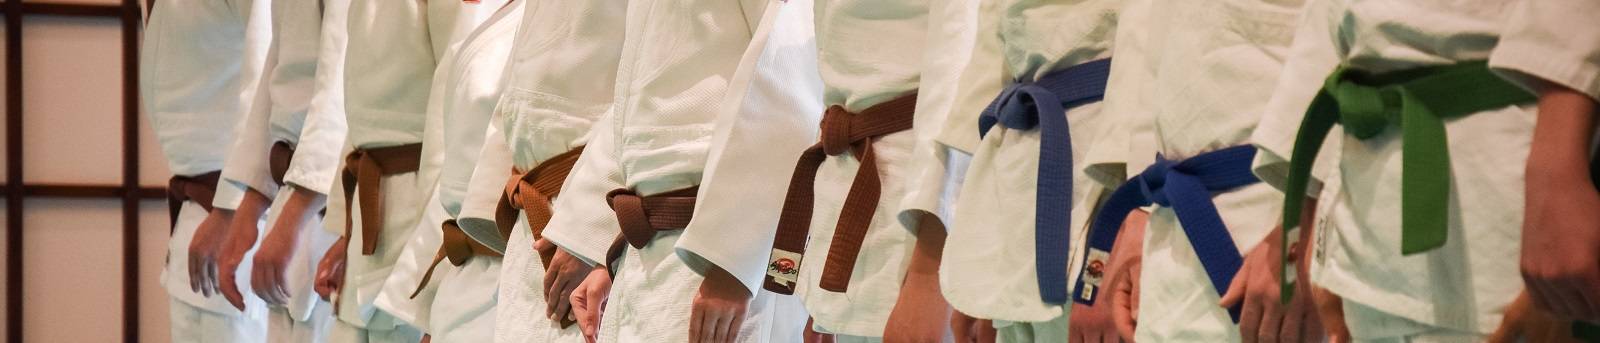 Bodaishinkan Ryu - Ecole de Judo - Bernard Wirz